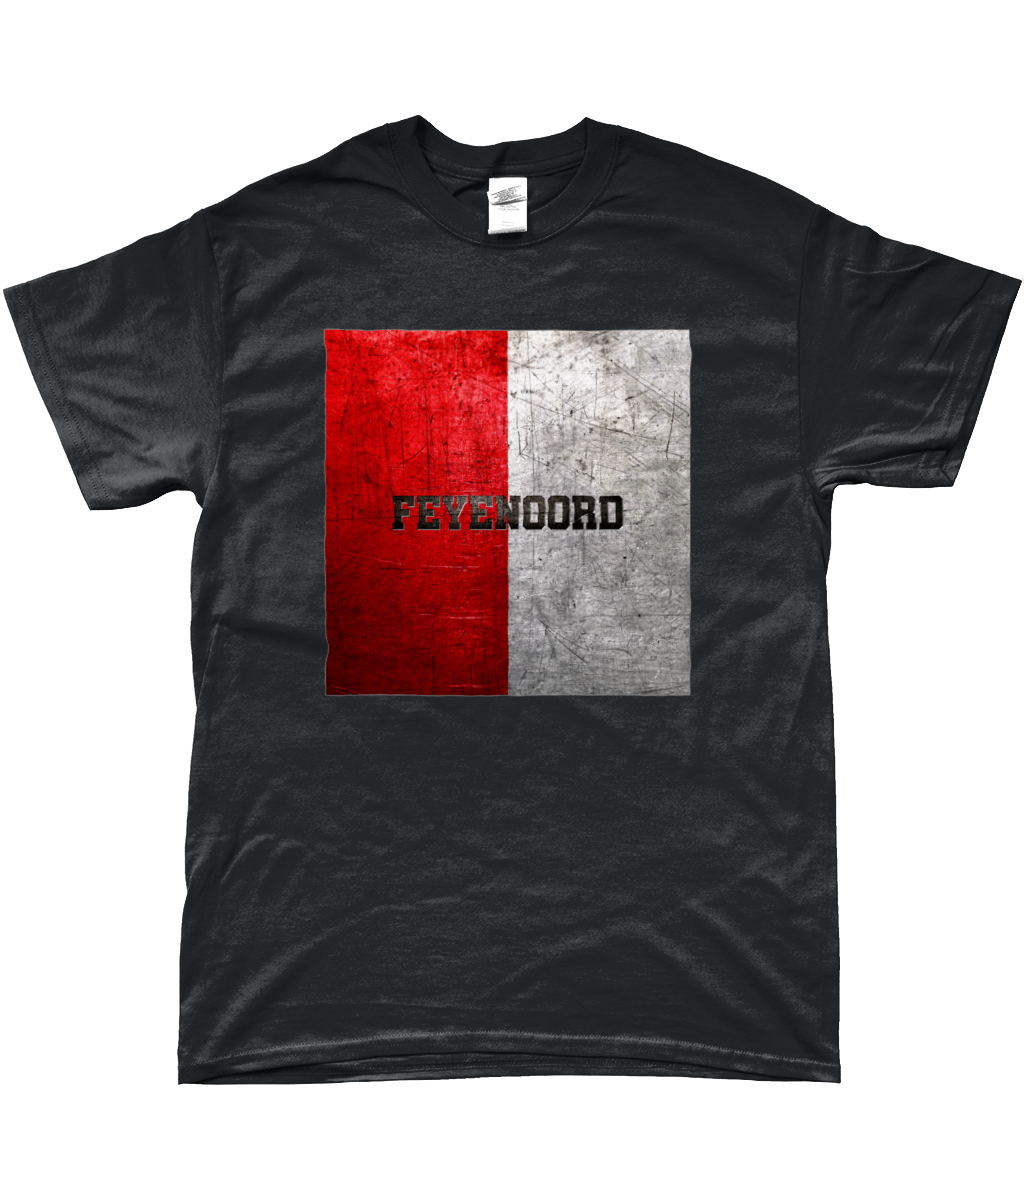 Feyenoord - T-Shirt